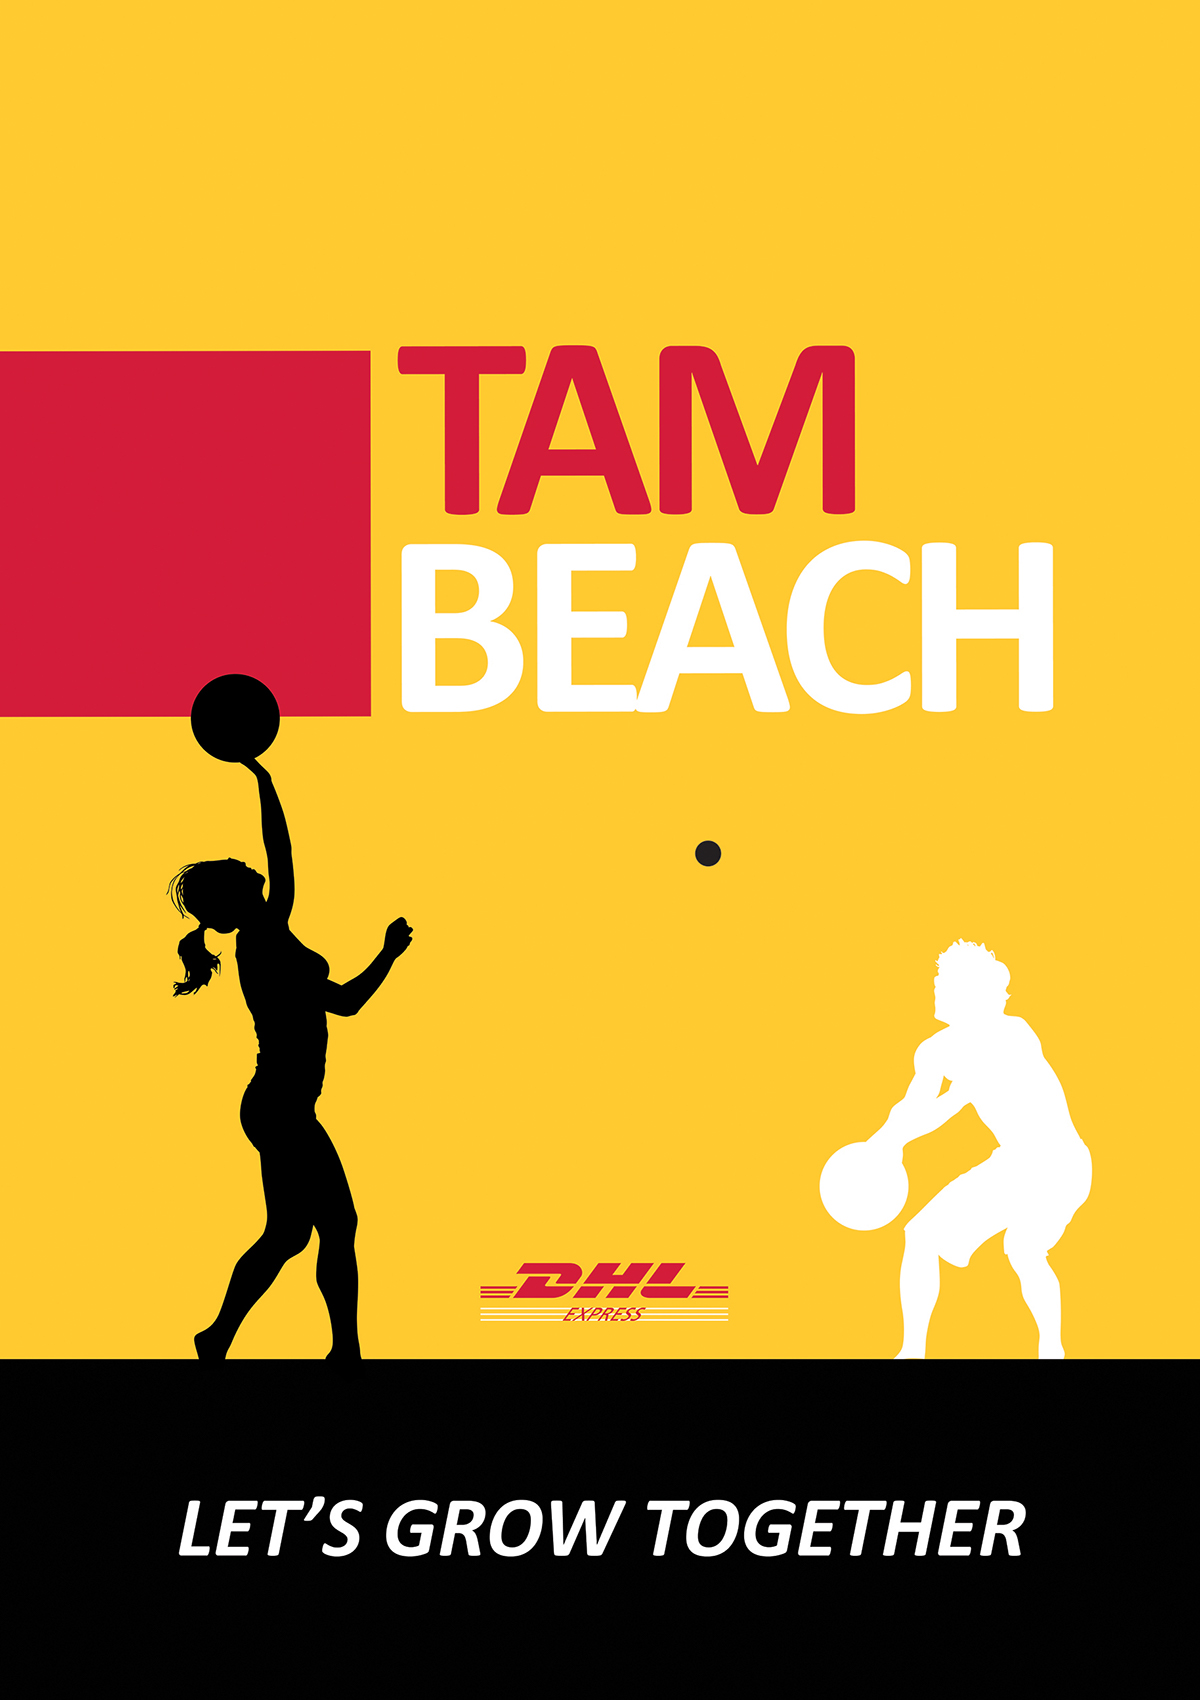 team building DHL express DHL Express rimini beach volley frisbee tambeach Tam poster graphic